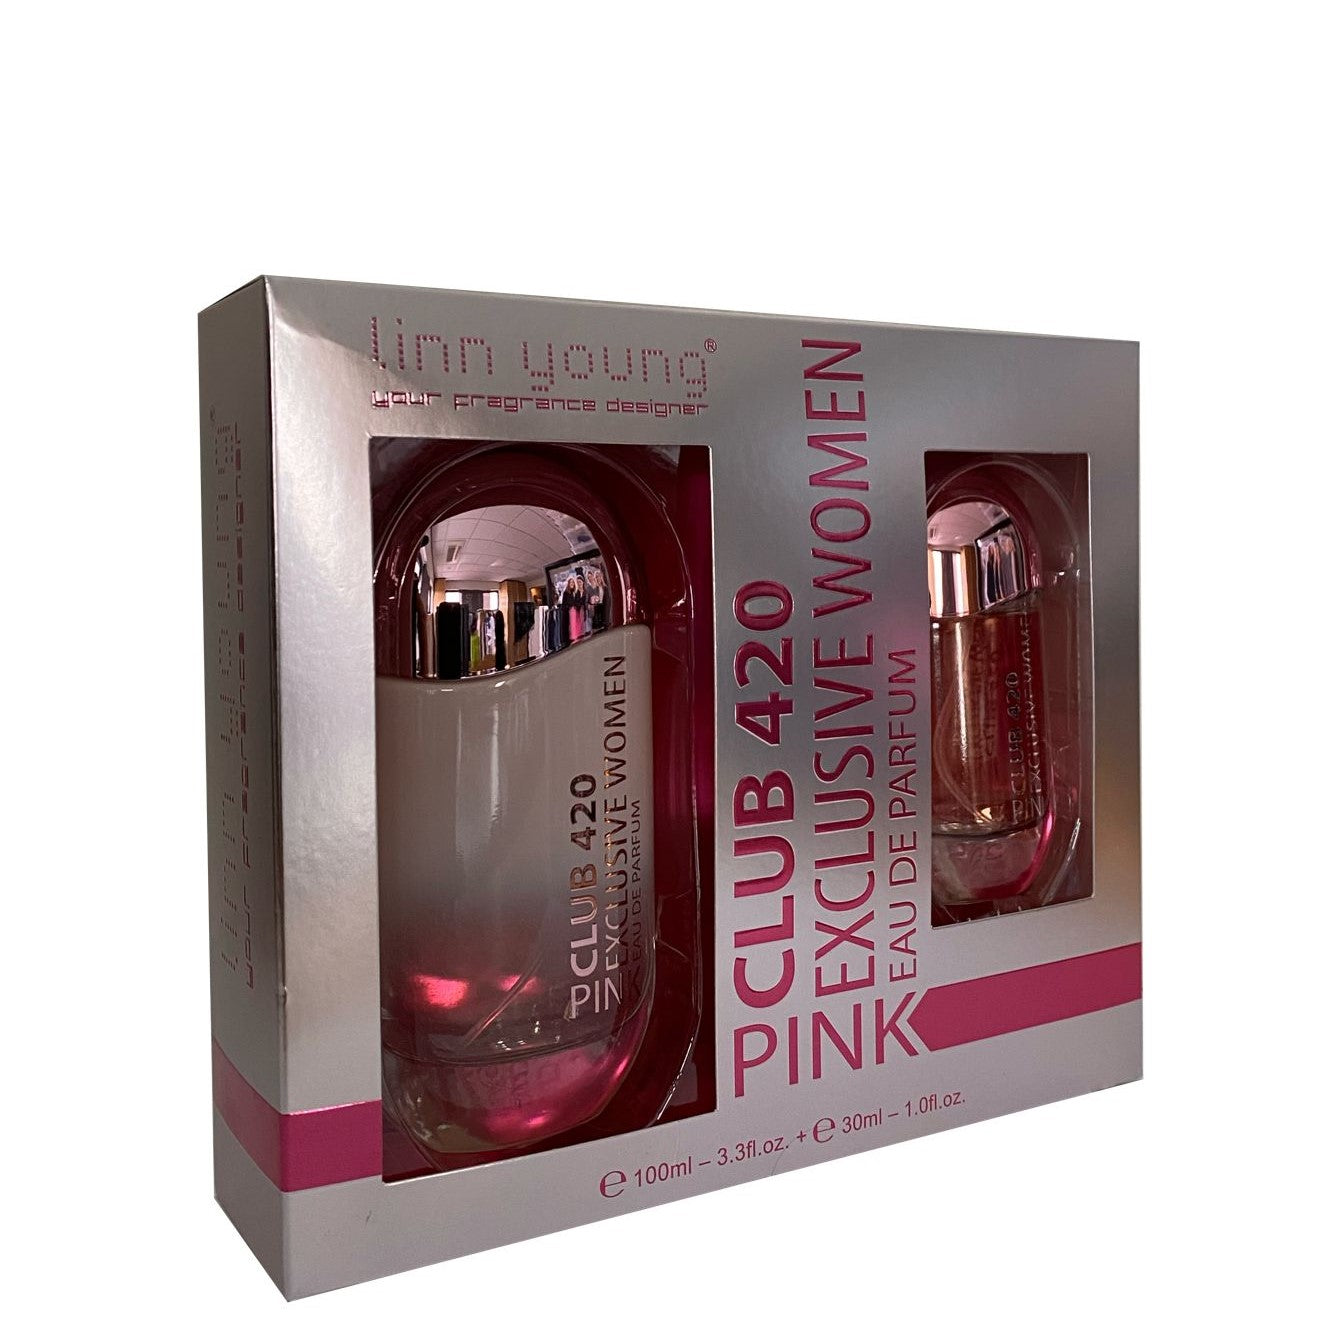 100 + 30 ml ml de Eau de Perfume "CLUB 420 PINK" Fragrância Floral para Mulheres